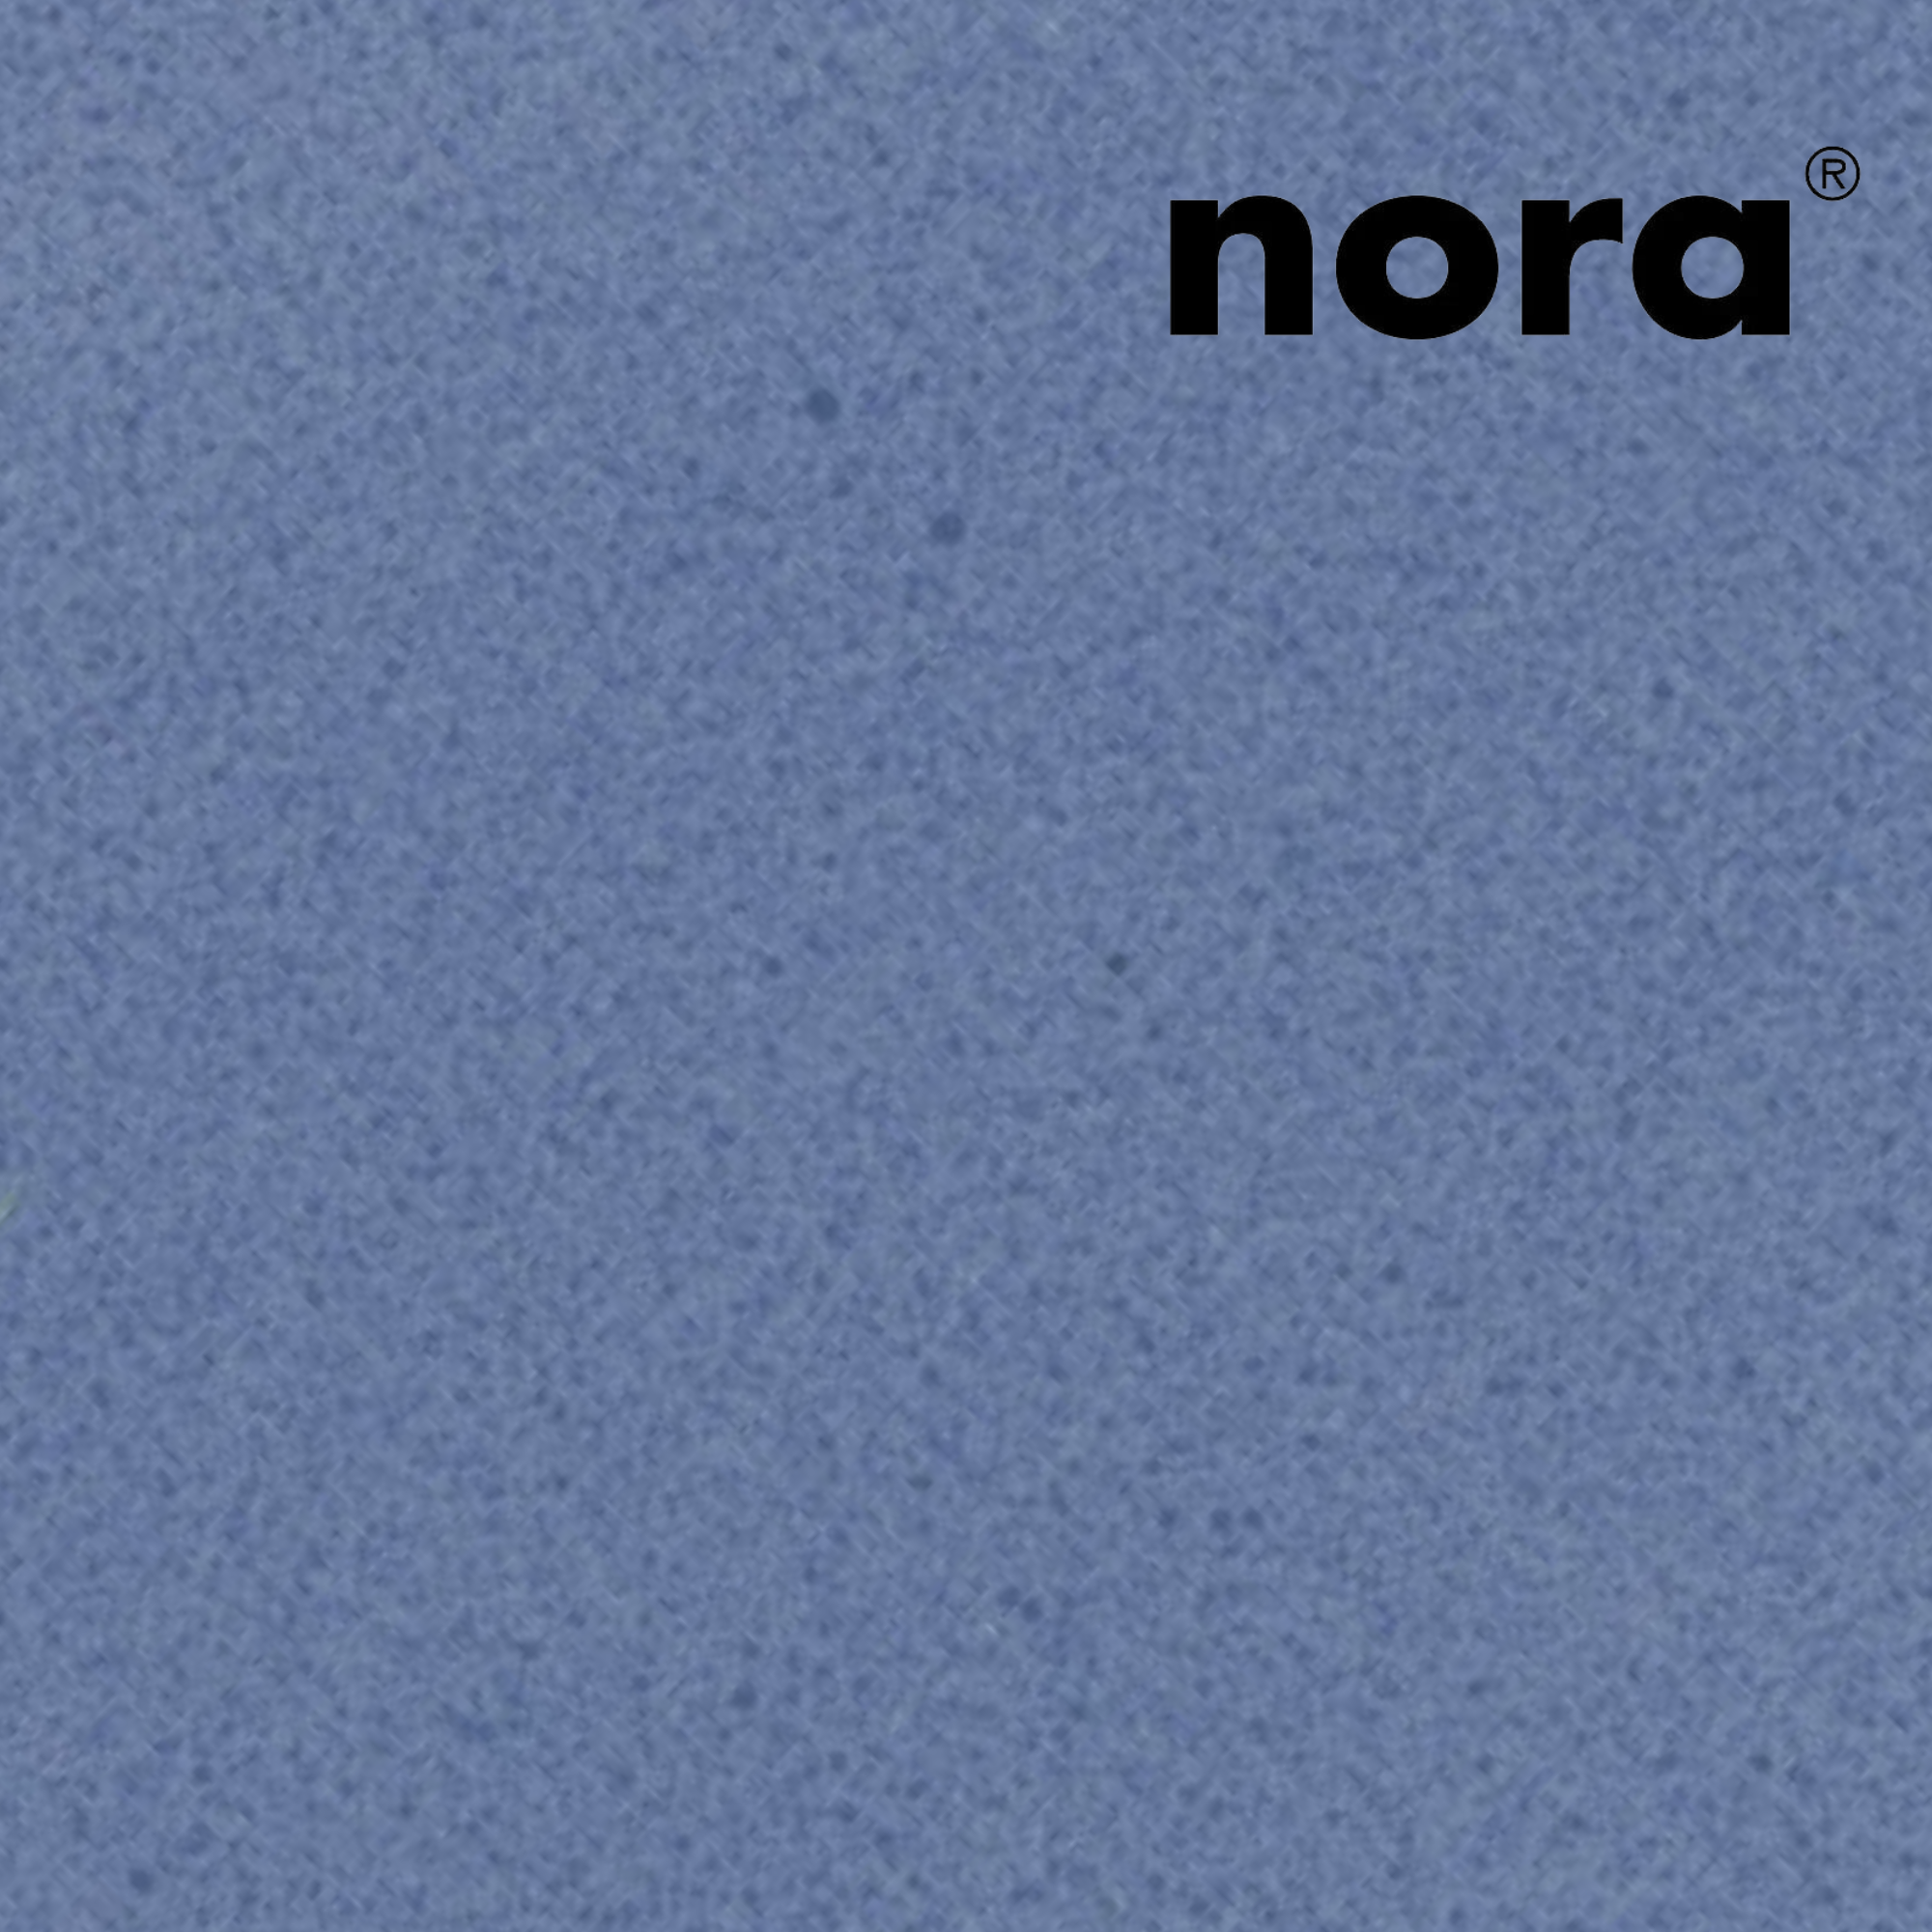 Astro Form 15 - EVA - Shore 15 - 2 mm / 3 mm / 4 mm / 6 mm - Nora